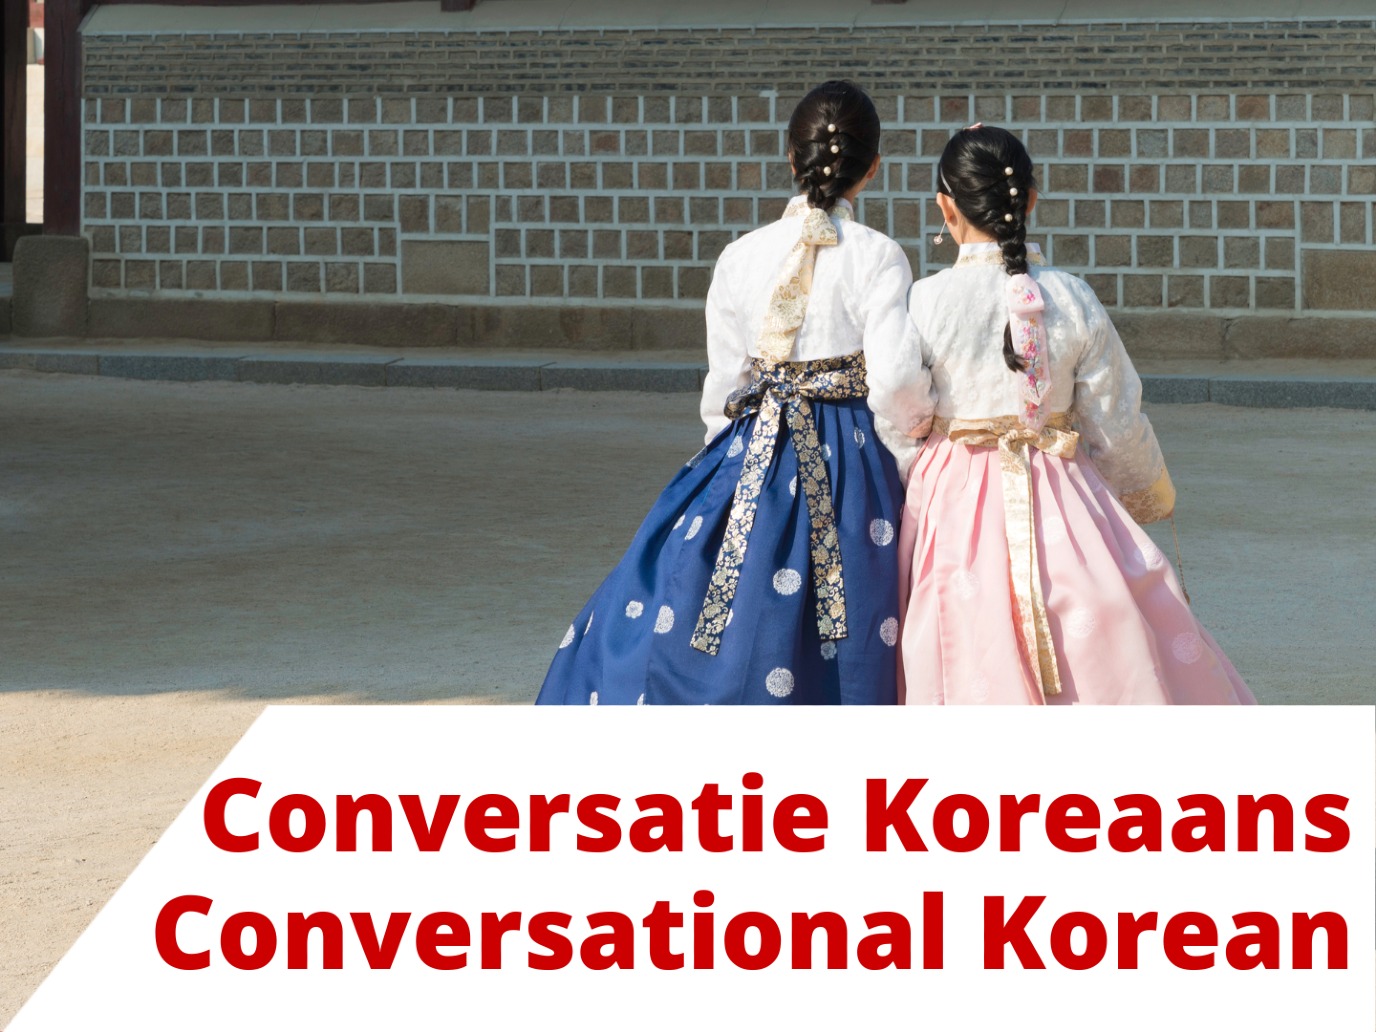 Conversational Korean elementary